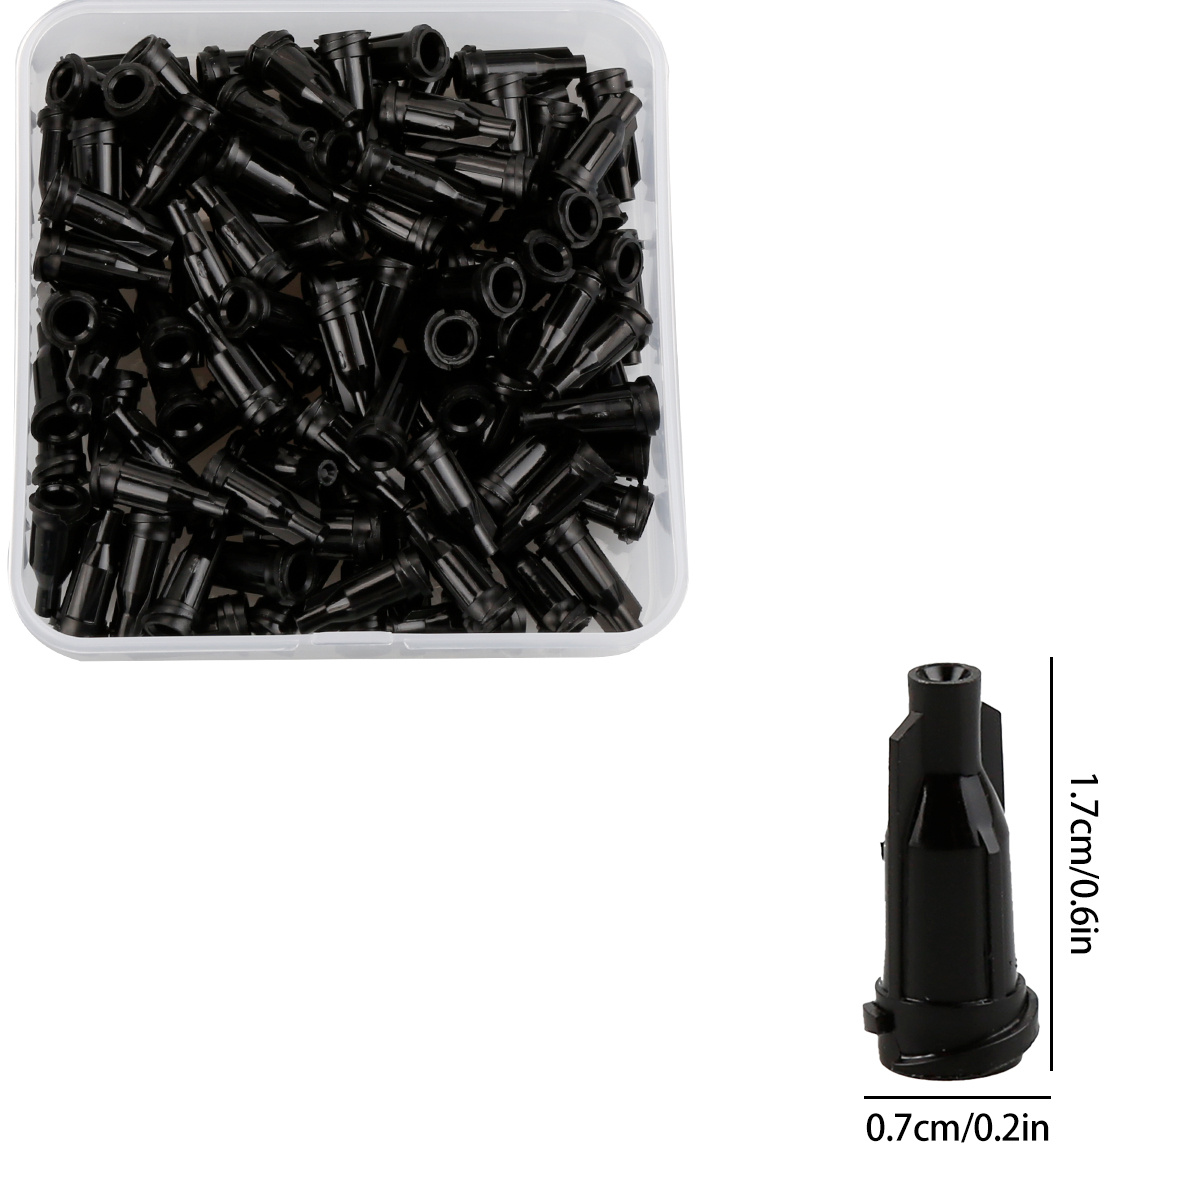 Luer Lock Dispensing Syringe Tip Cap, Black Color, 100 Pieces in Storage  Pack - Wholesale Craft Outlet